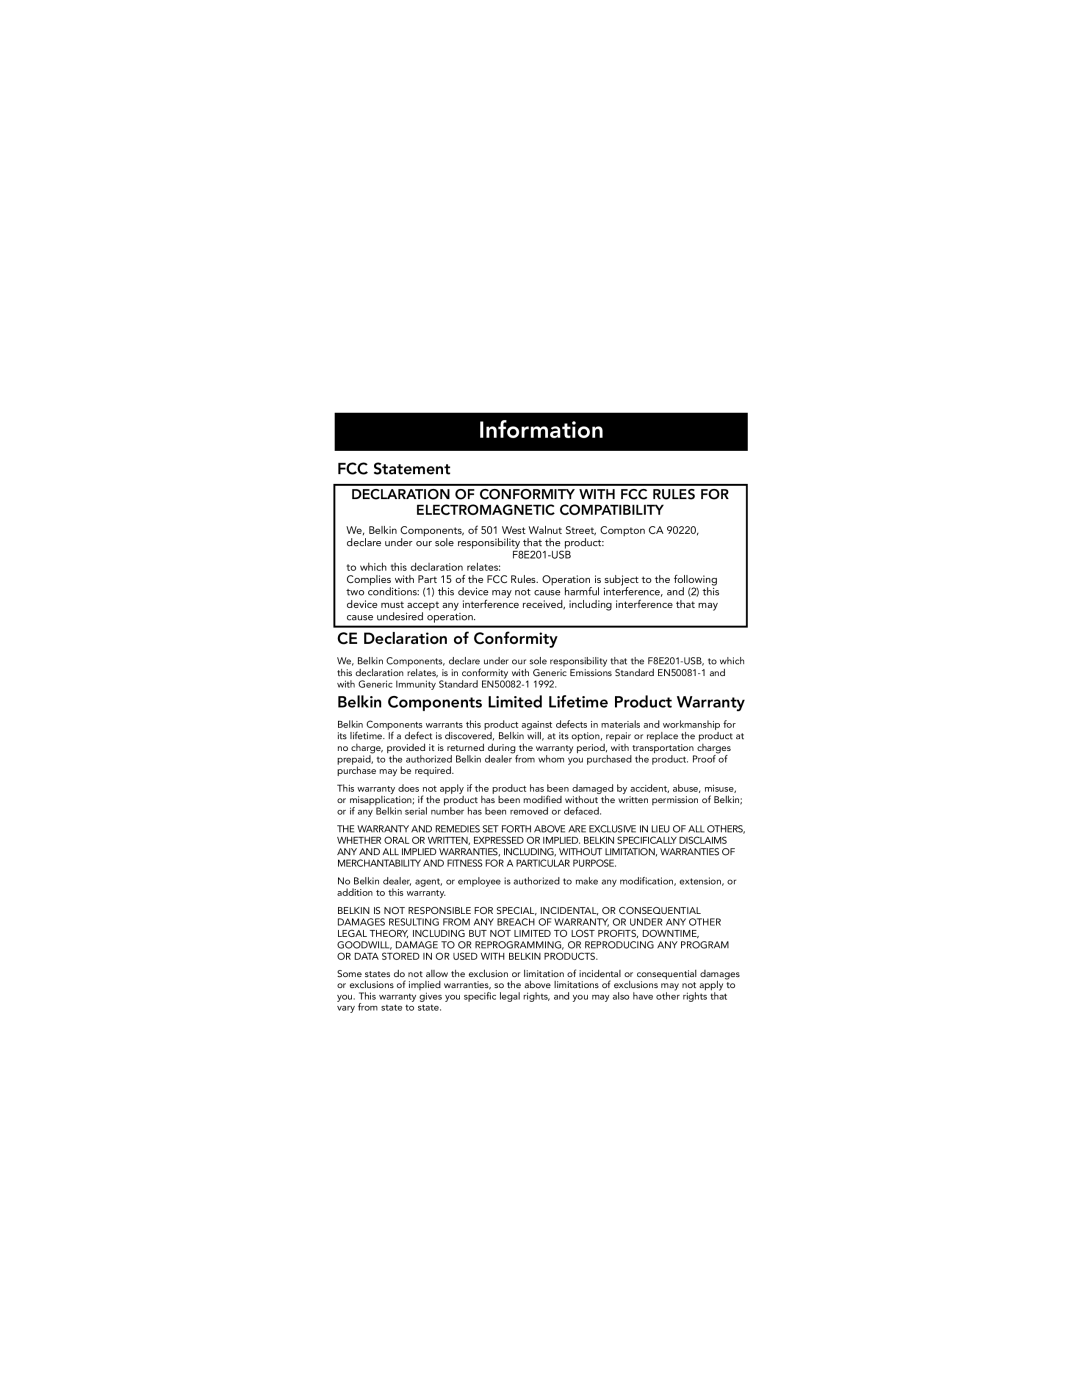 Belkin P73123, F8E201 user manual Information, FCC Statement, CE Declaration of Conformity 